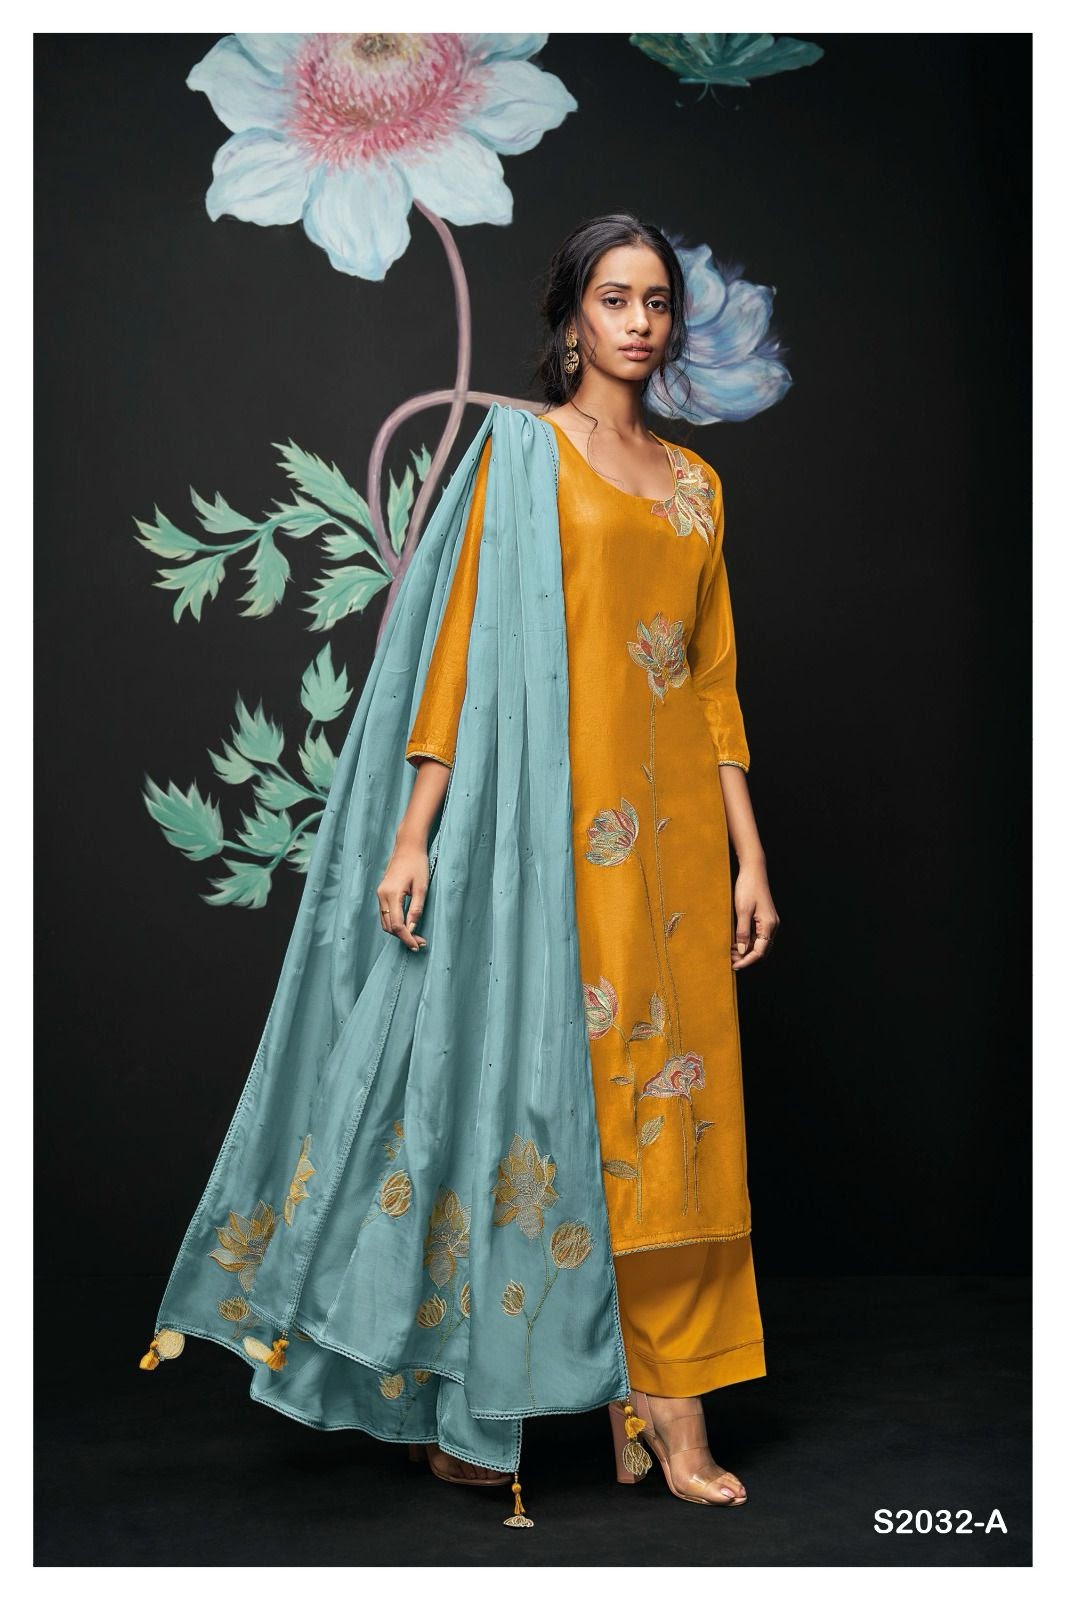 S2032-Ab Aindra Ganga Silk Plazzo Style Suits